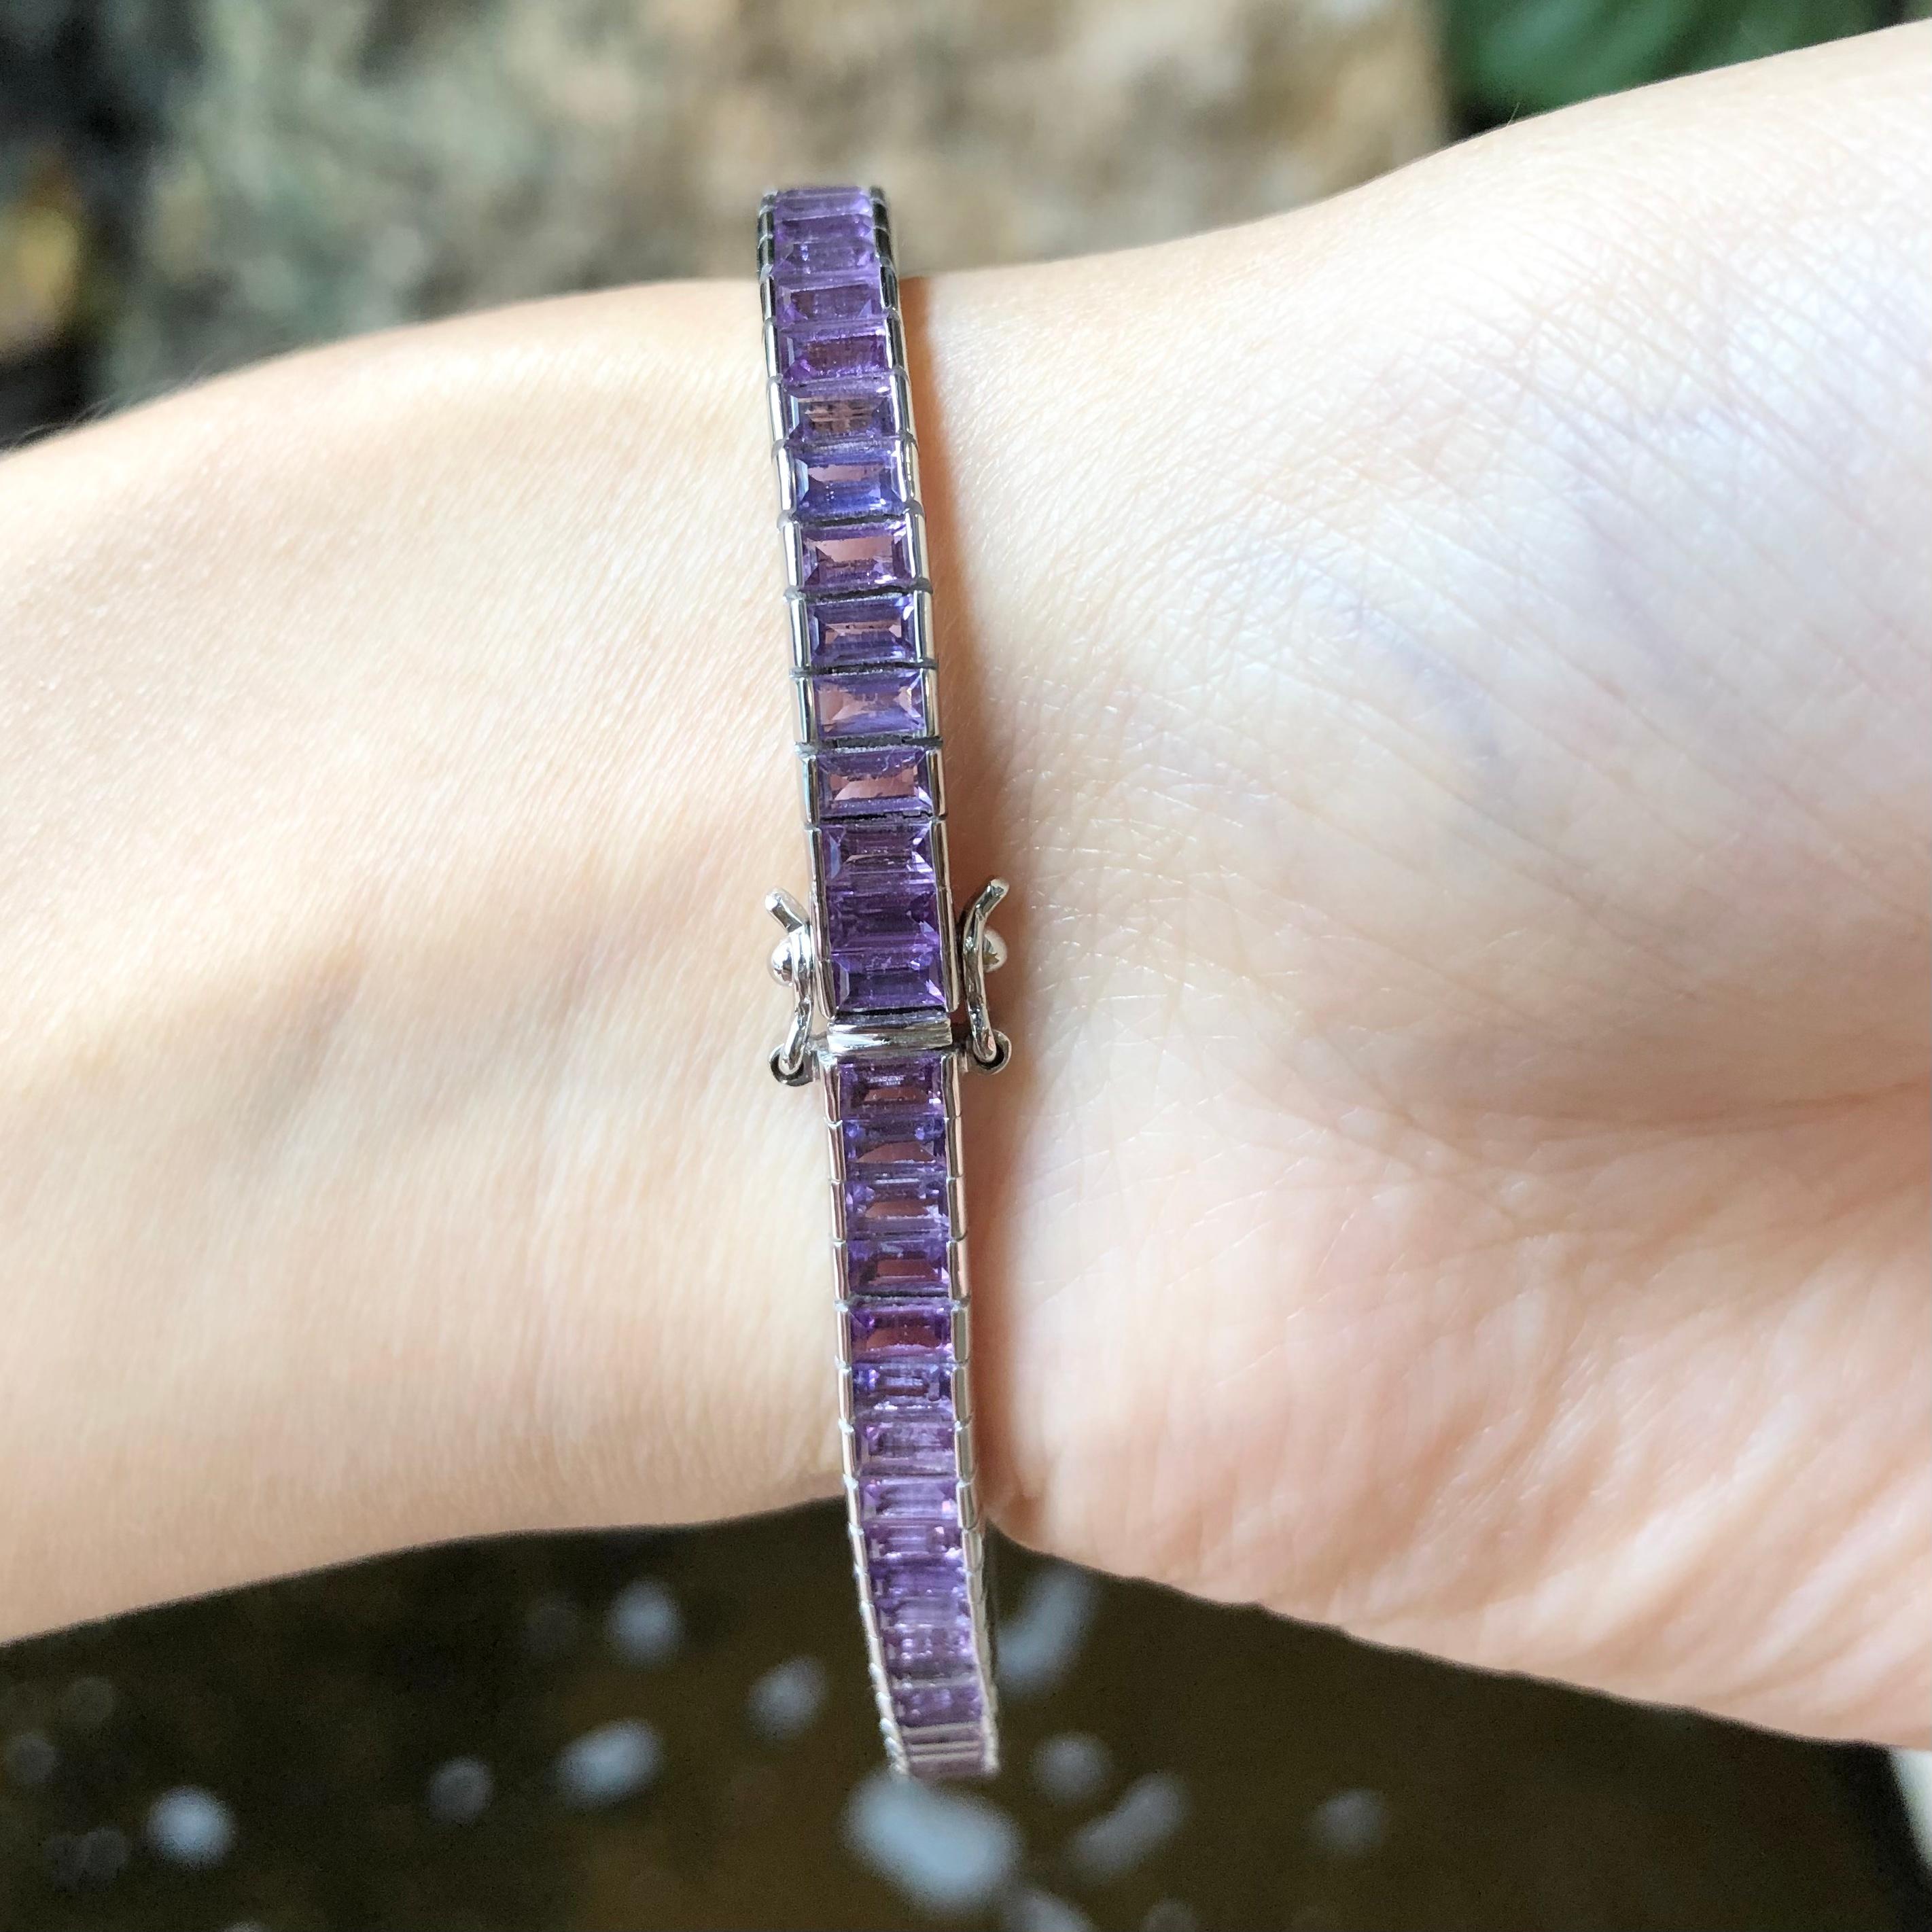 Purple Sapphire 11.50 carats Bracelet set in 18 Karat White Gold Settings

Width:  0.5 cm 
Length: 18.0 cm
Total Weight: 29.12 grams

